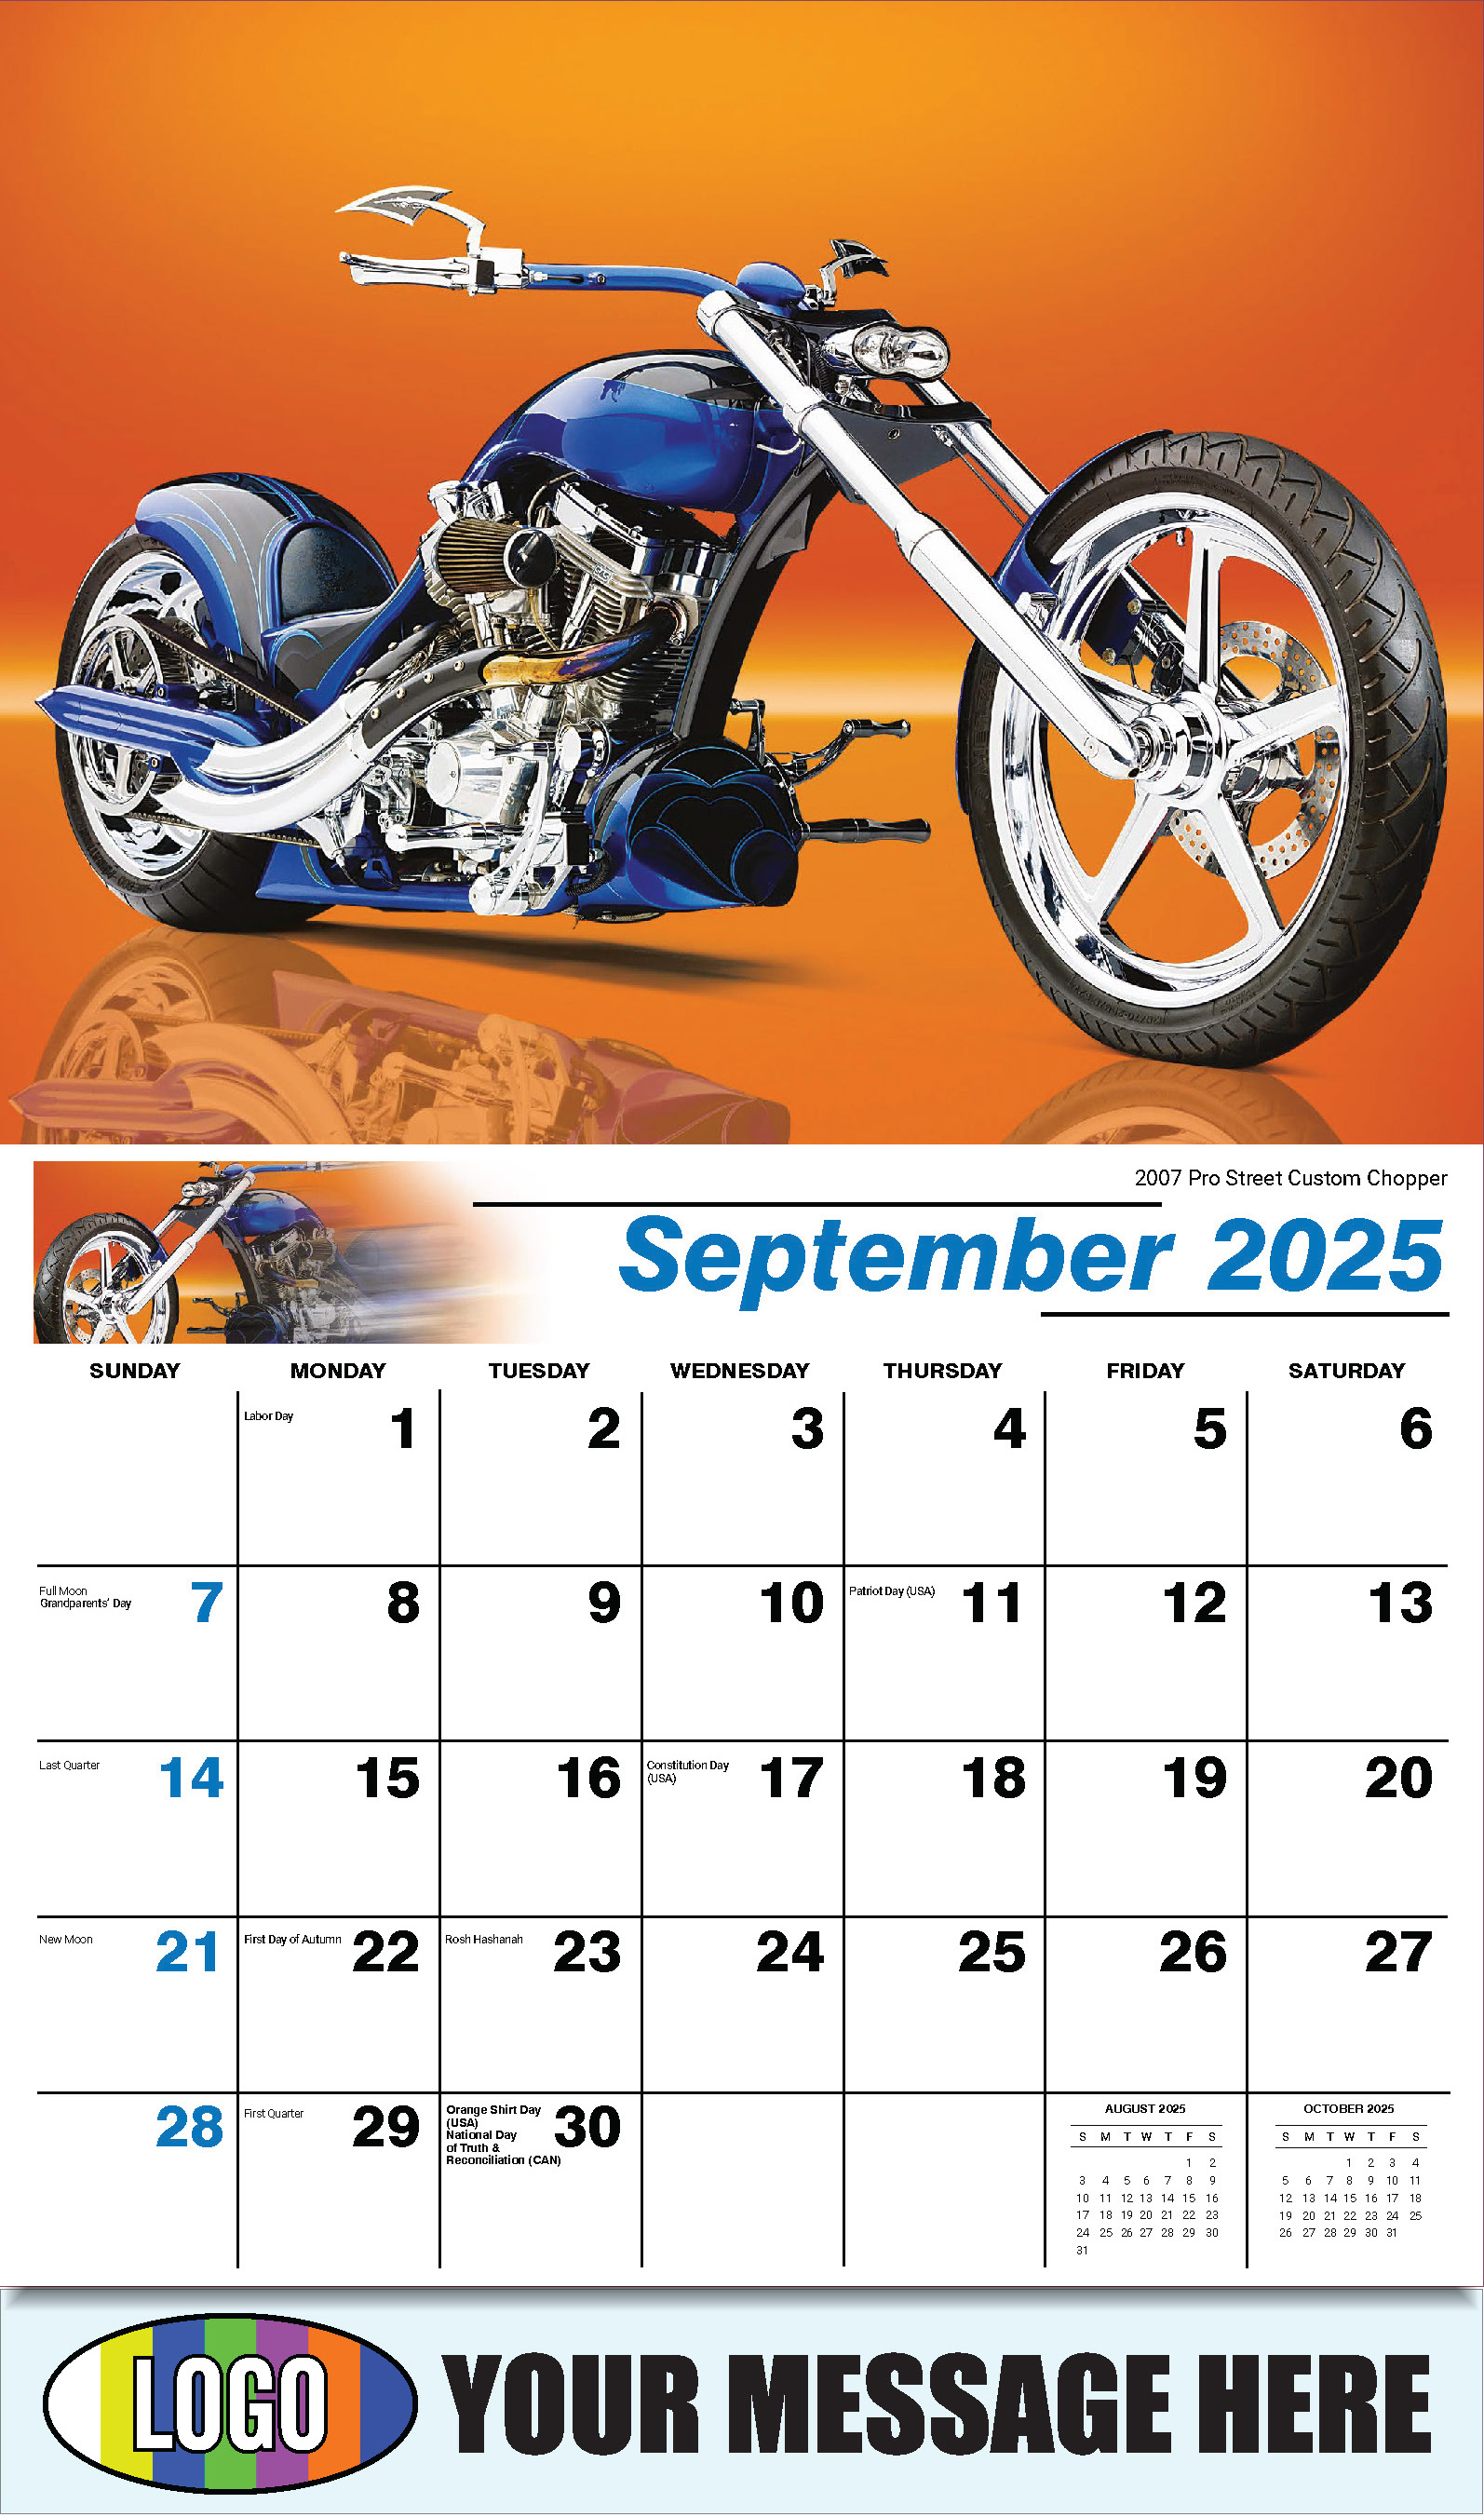 Motorcycle Mania 2025 Automotve Business Advertising Wall Calendar - September